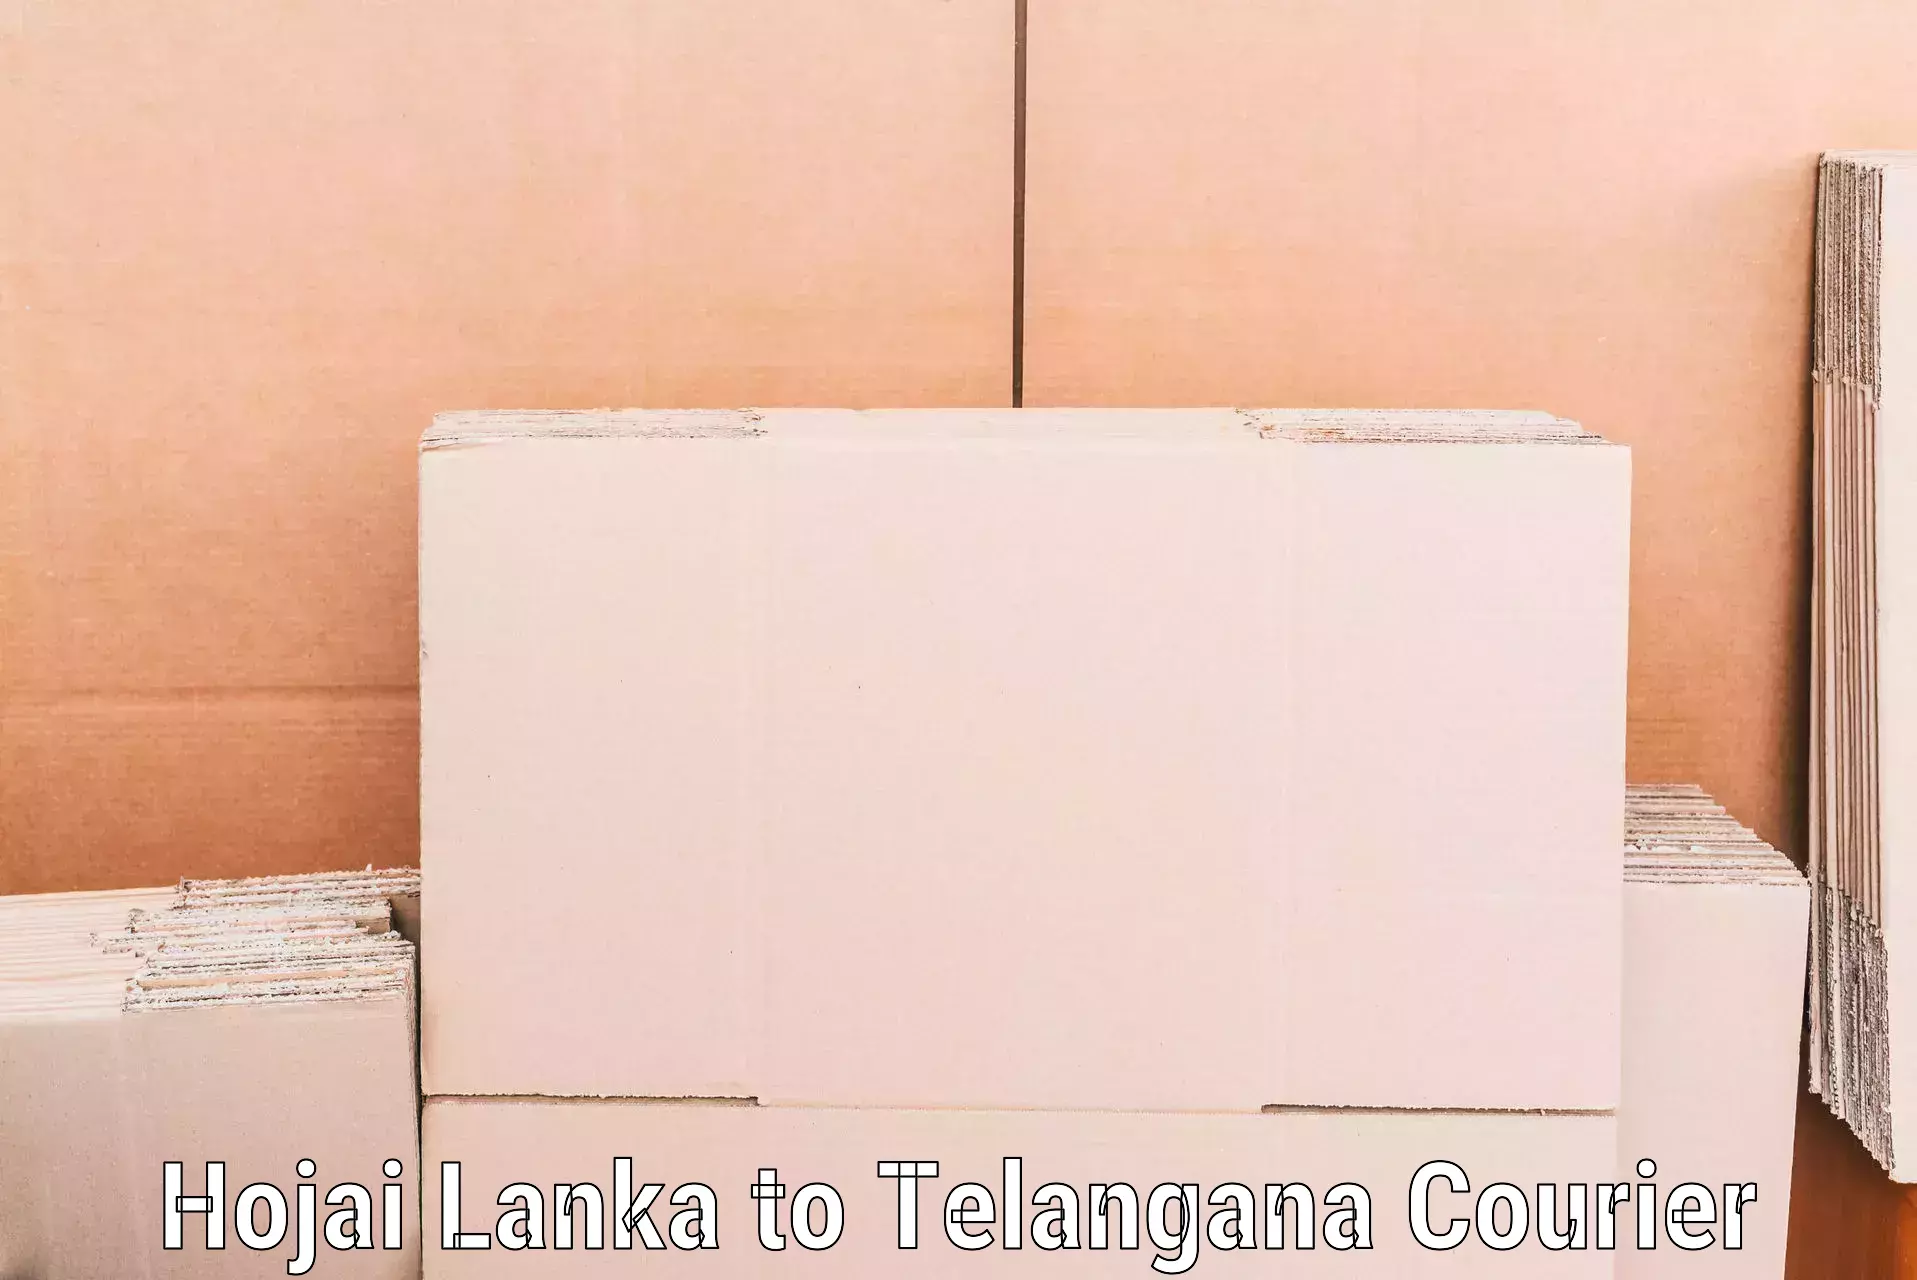 Furniture transport professionals Hojai Lanka to Cherla